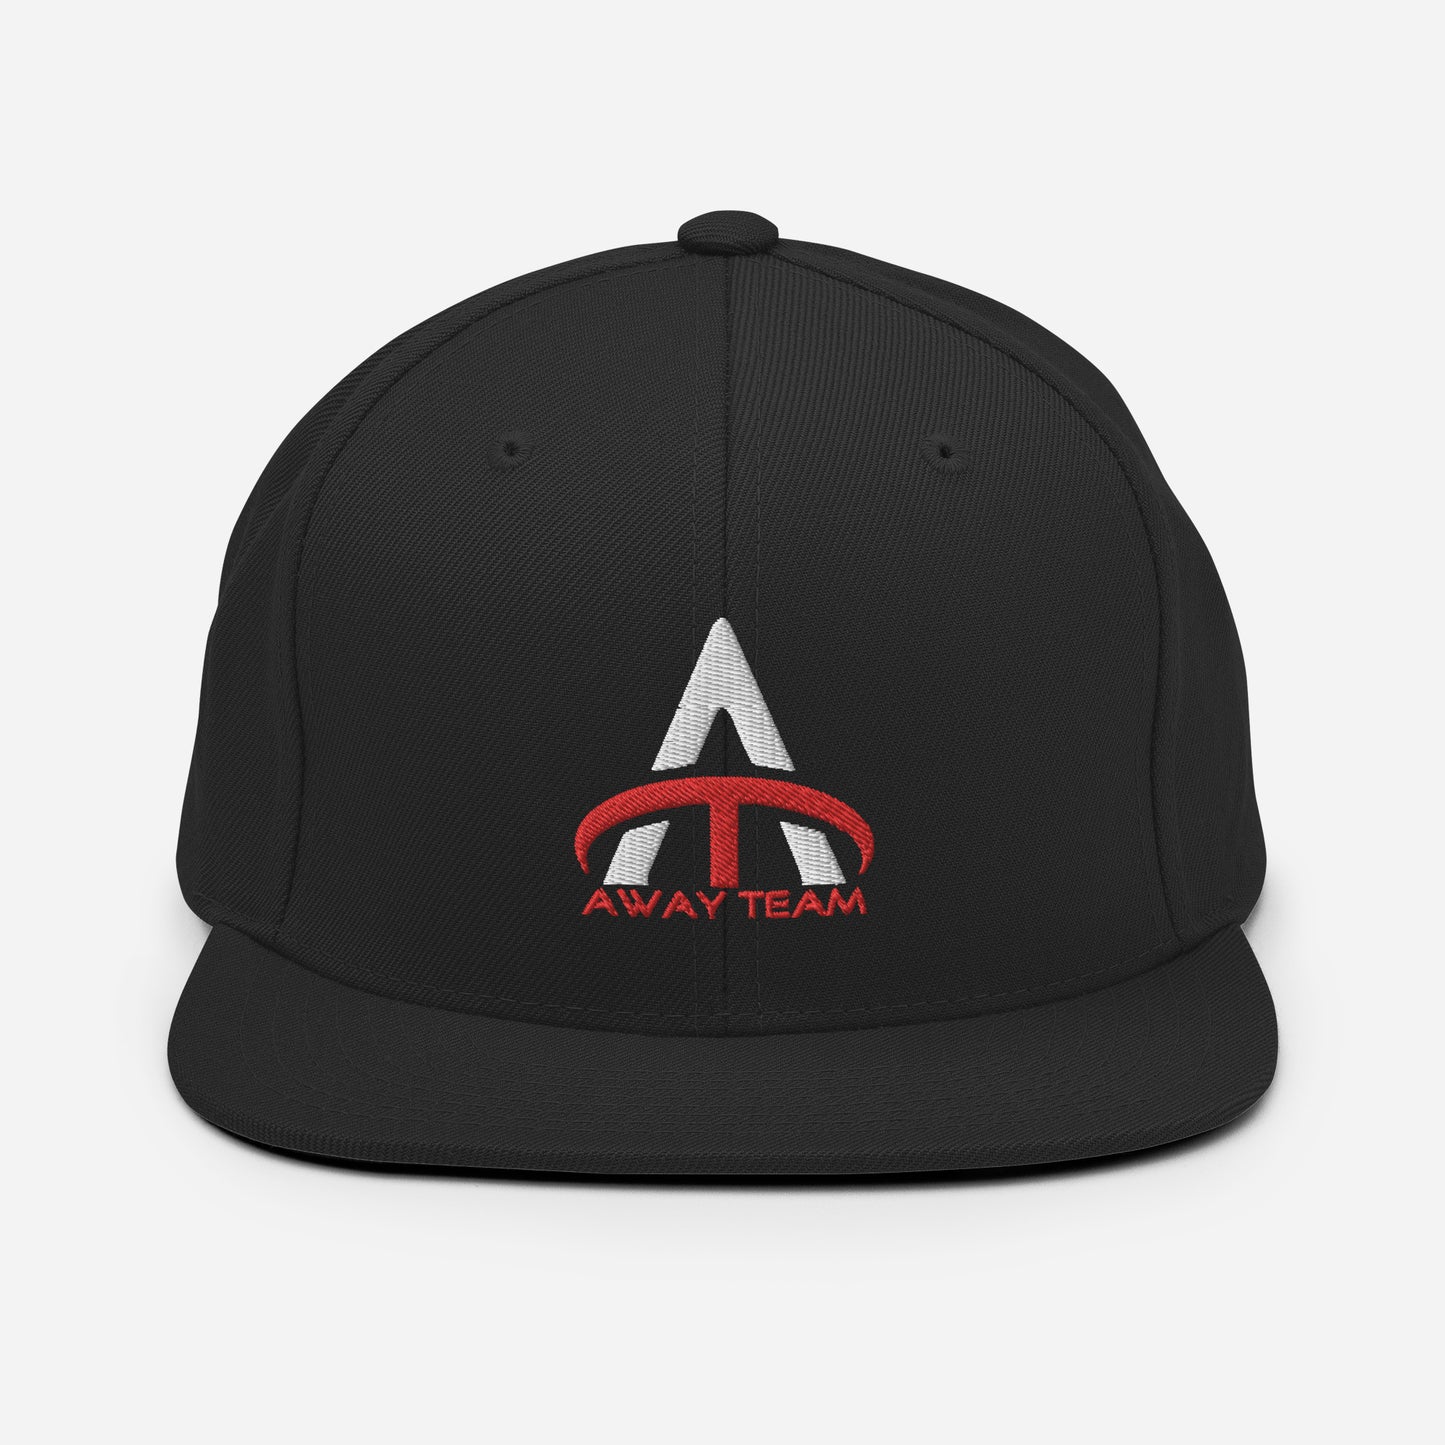 Away Team Snapback Hat